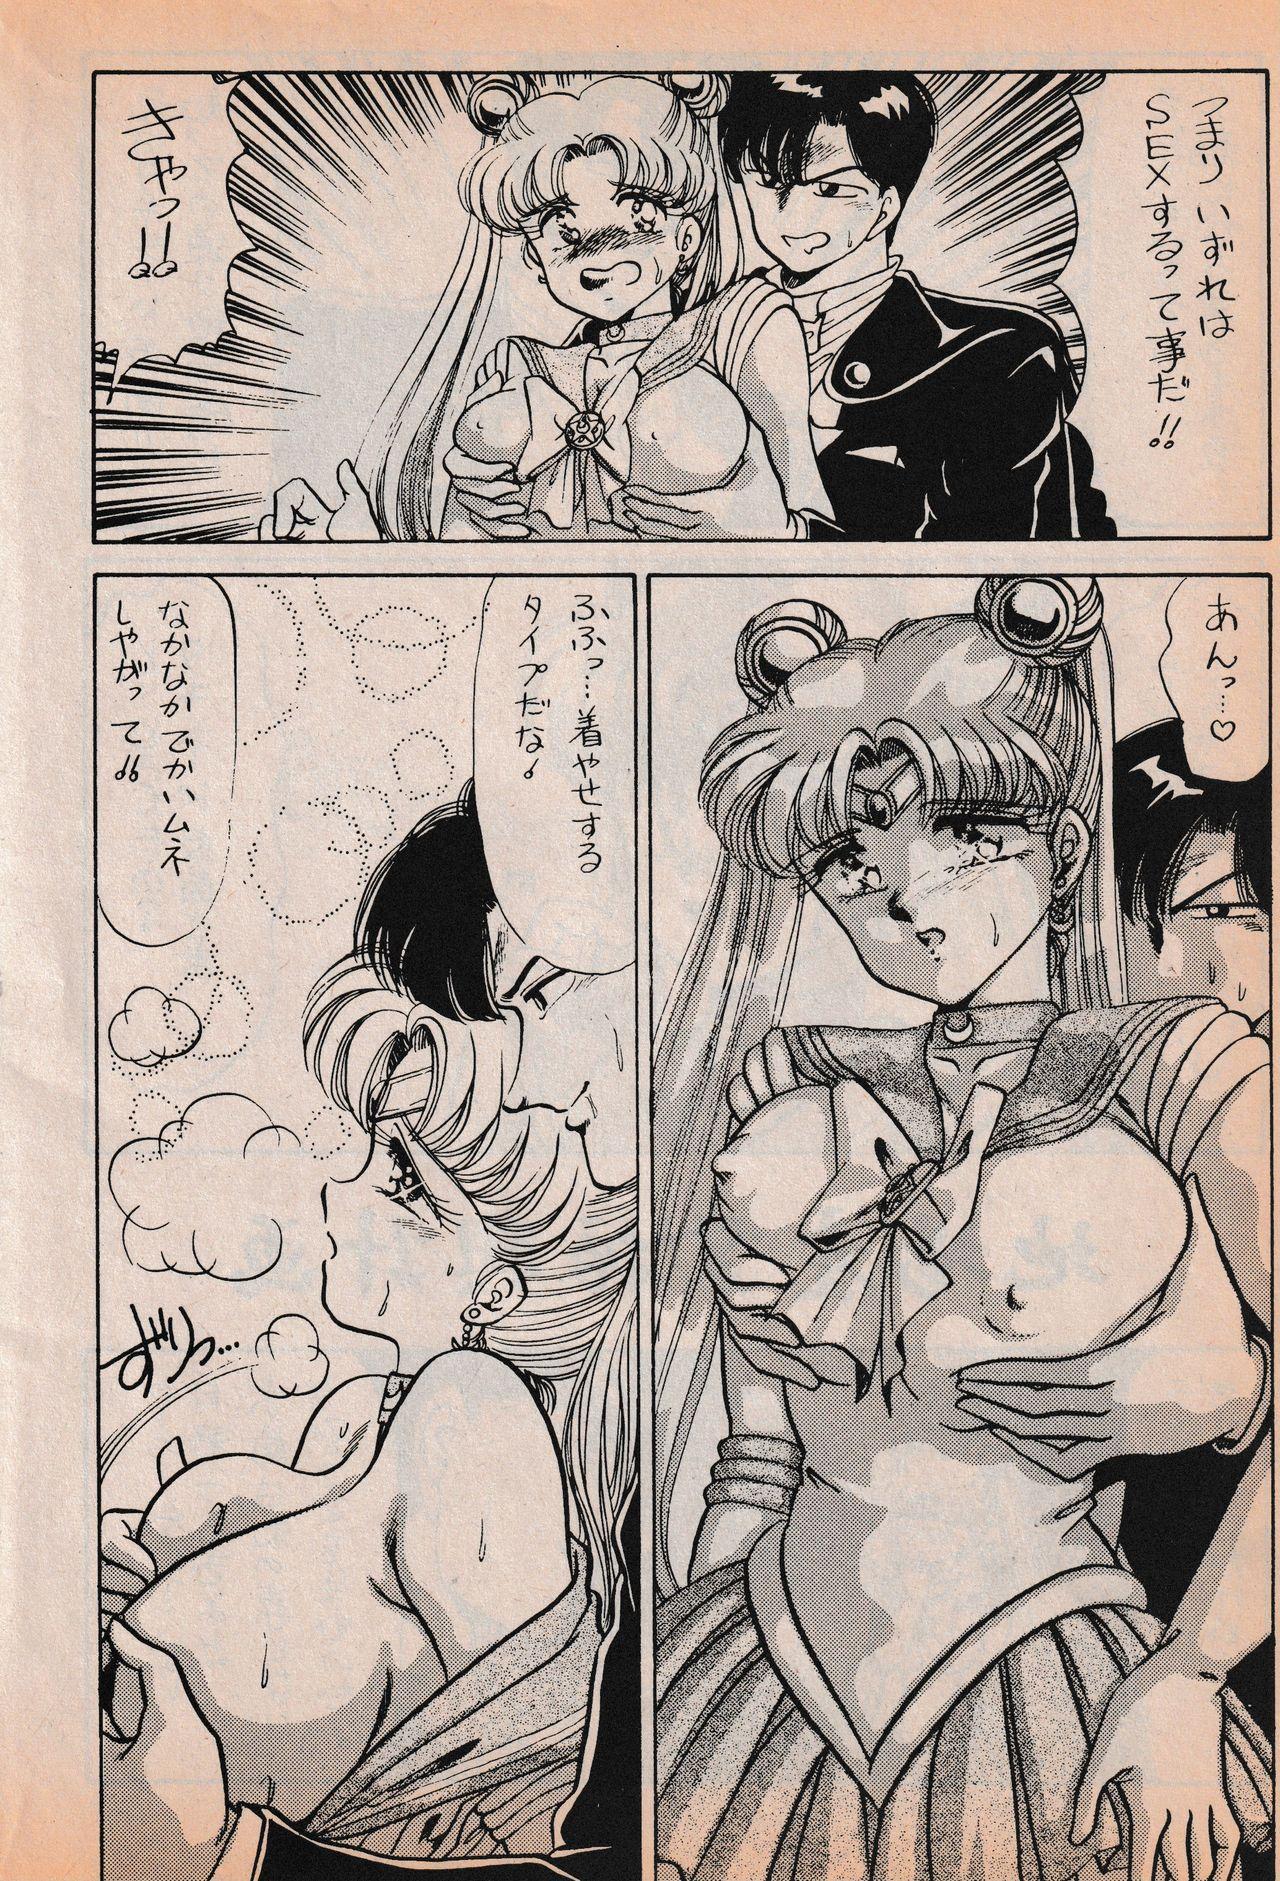 Oral Sex Sailor X vol. 7 - The Kama Sutra Of Pain - Sailor moon Tenchi muyo G gundam Dyke - Page 3